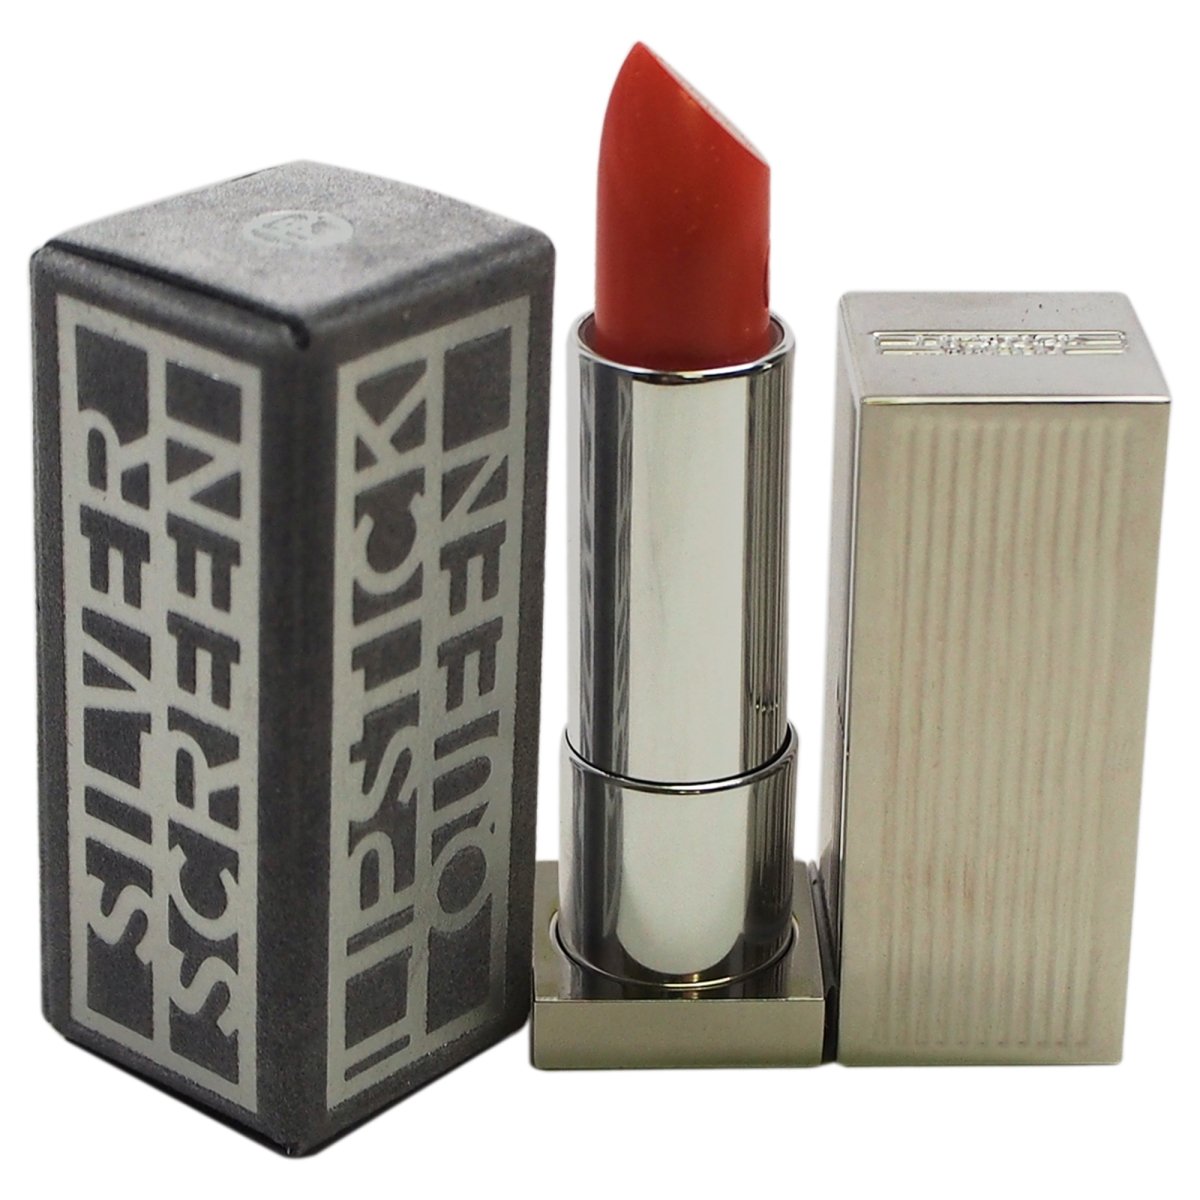 W-c-6730 0.12 Oz Silver Screen Lipstick - See Me For Women